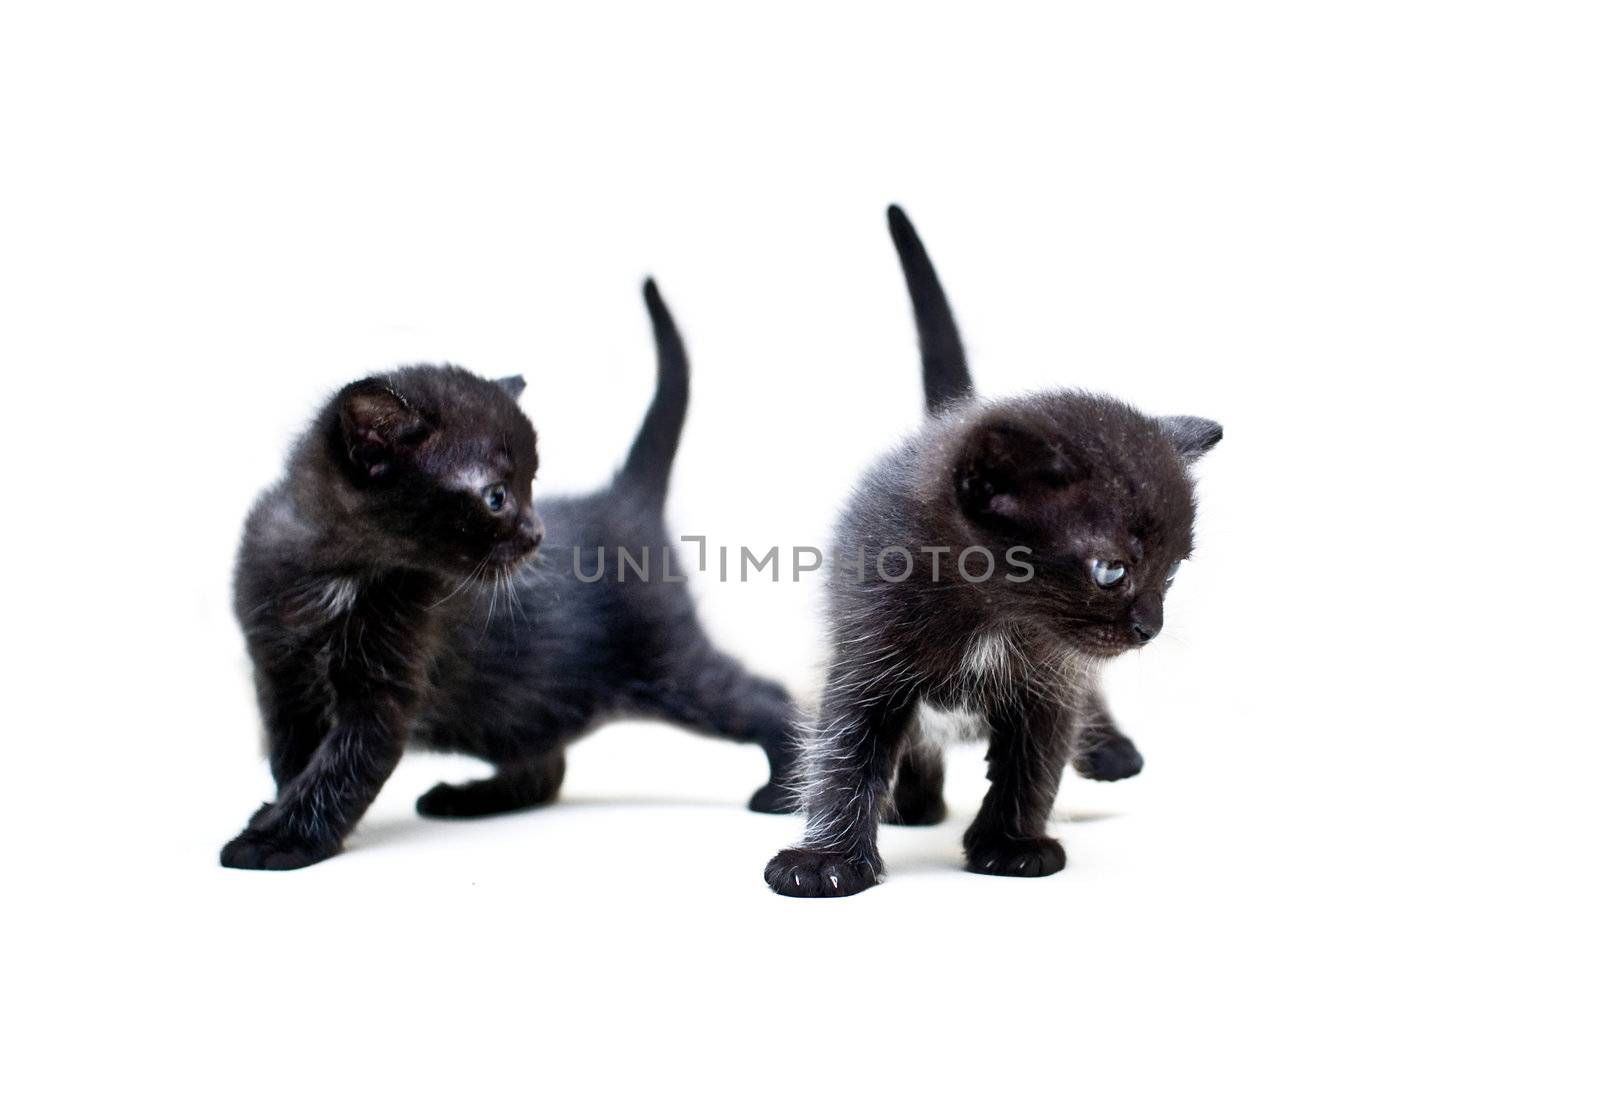 Two black kittens explore the world around